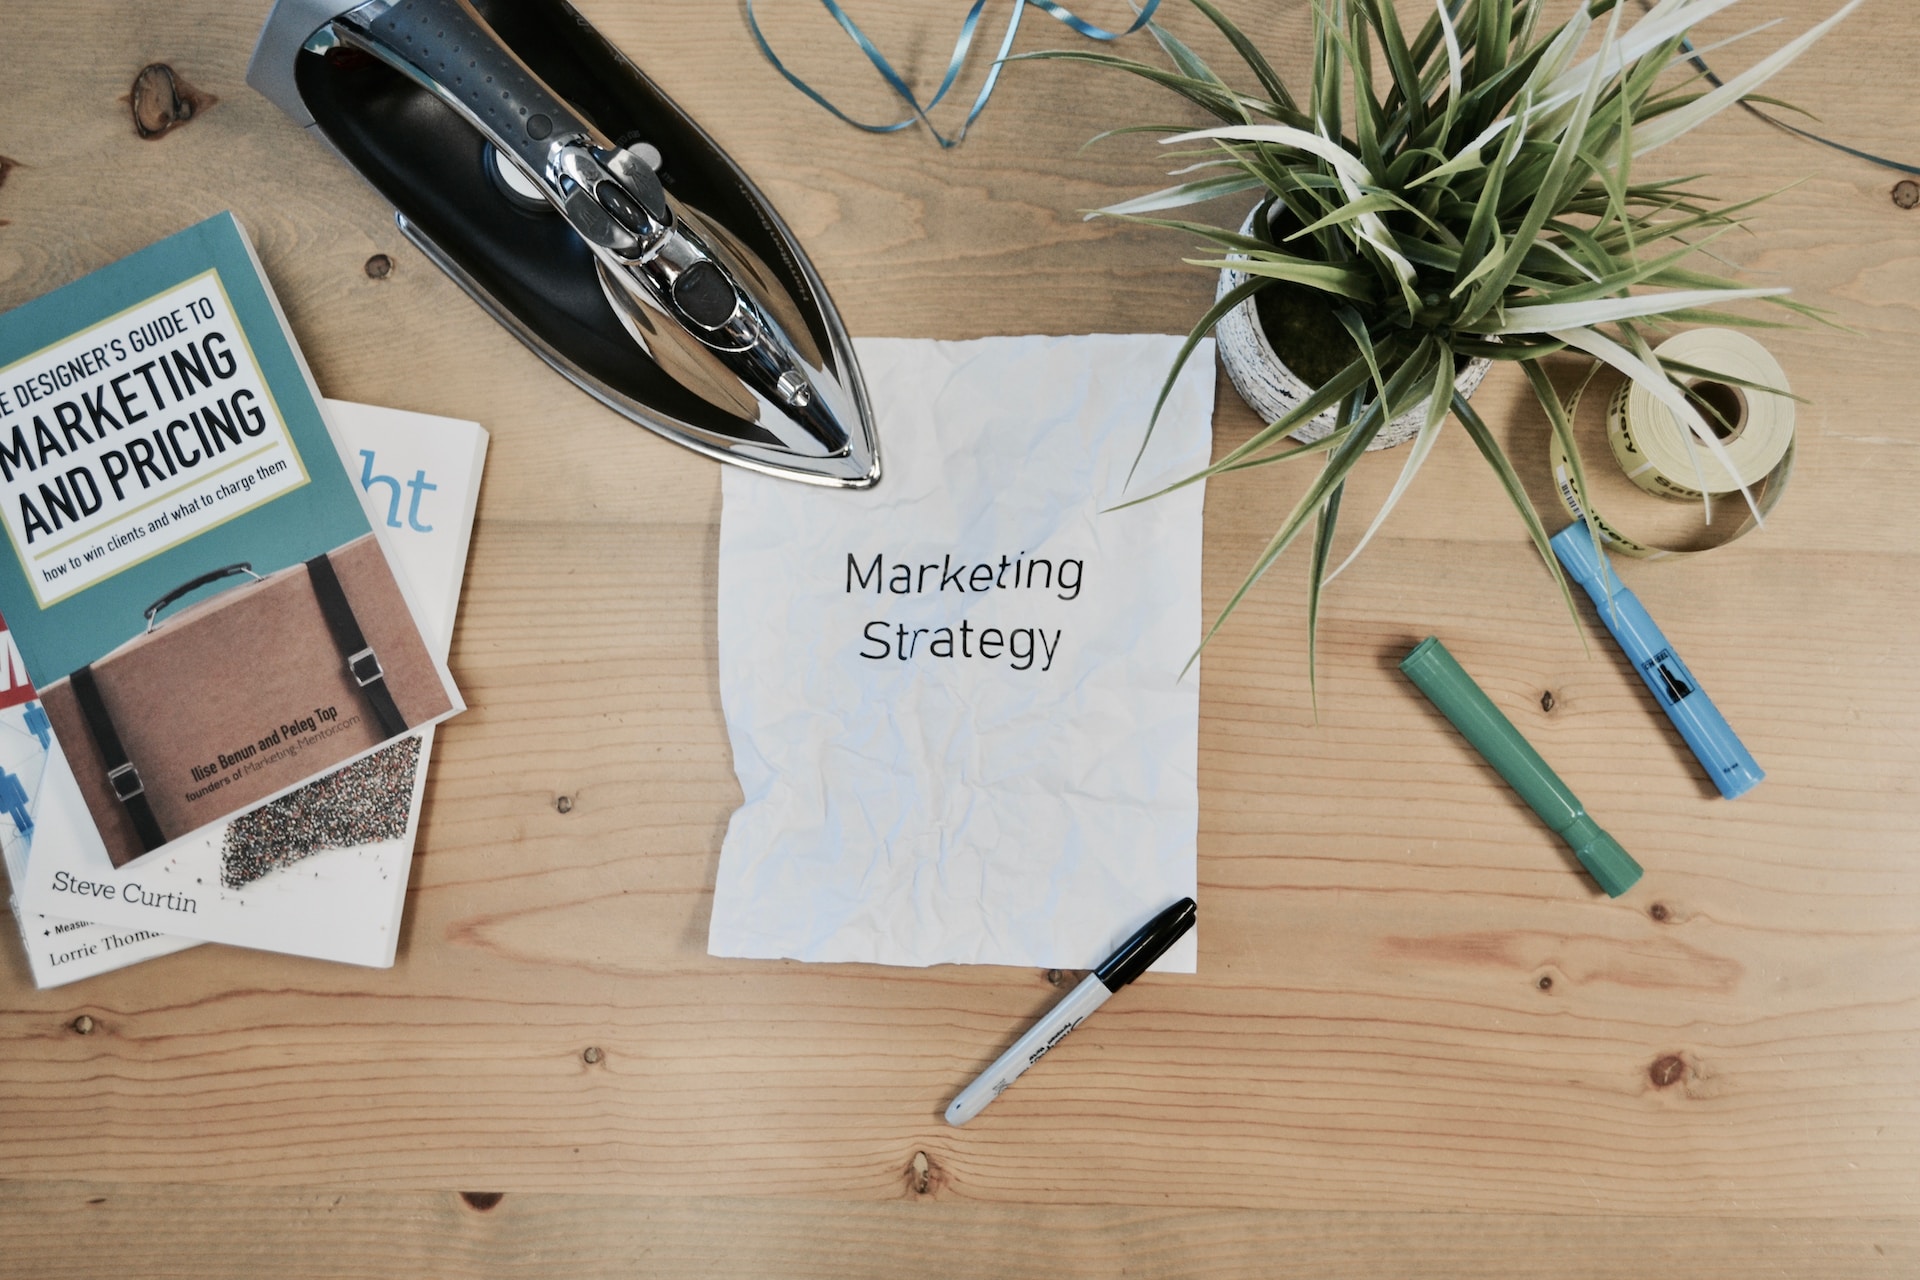 marketing strategy on paper, books on desk